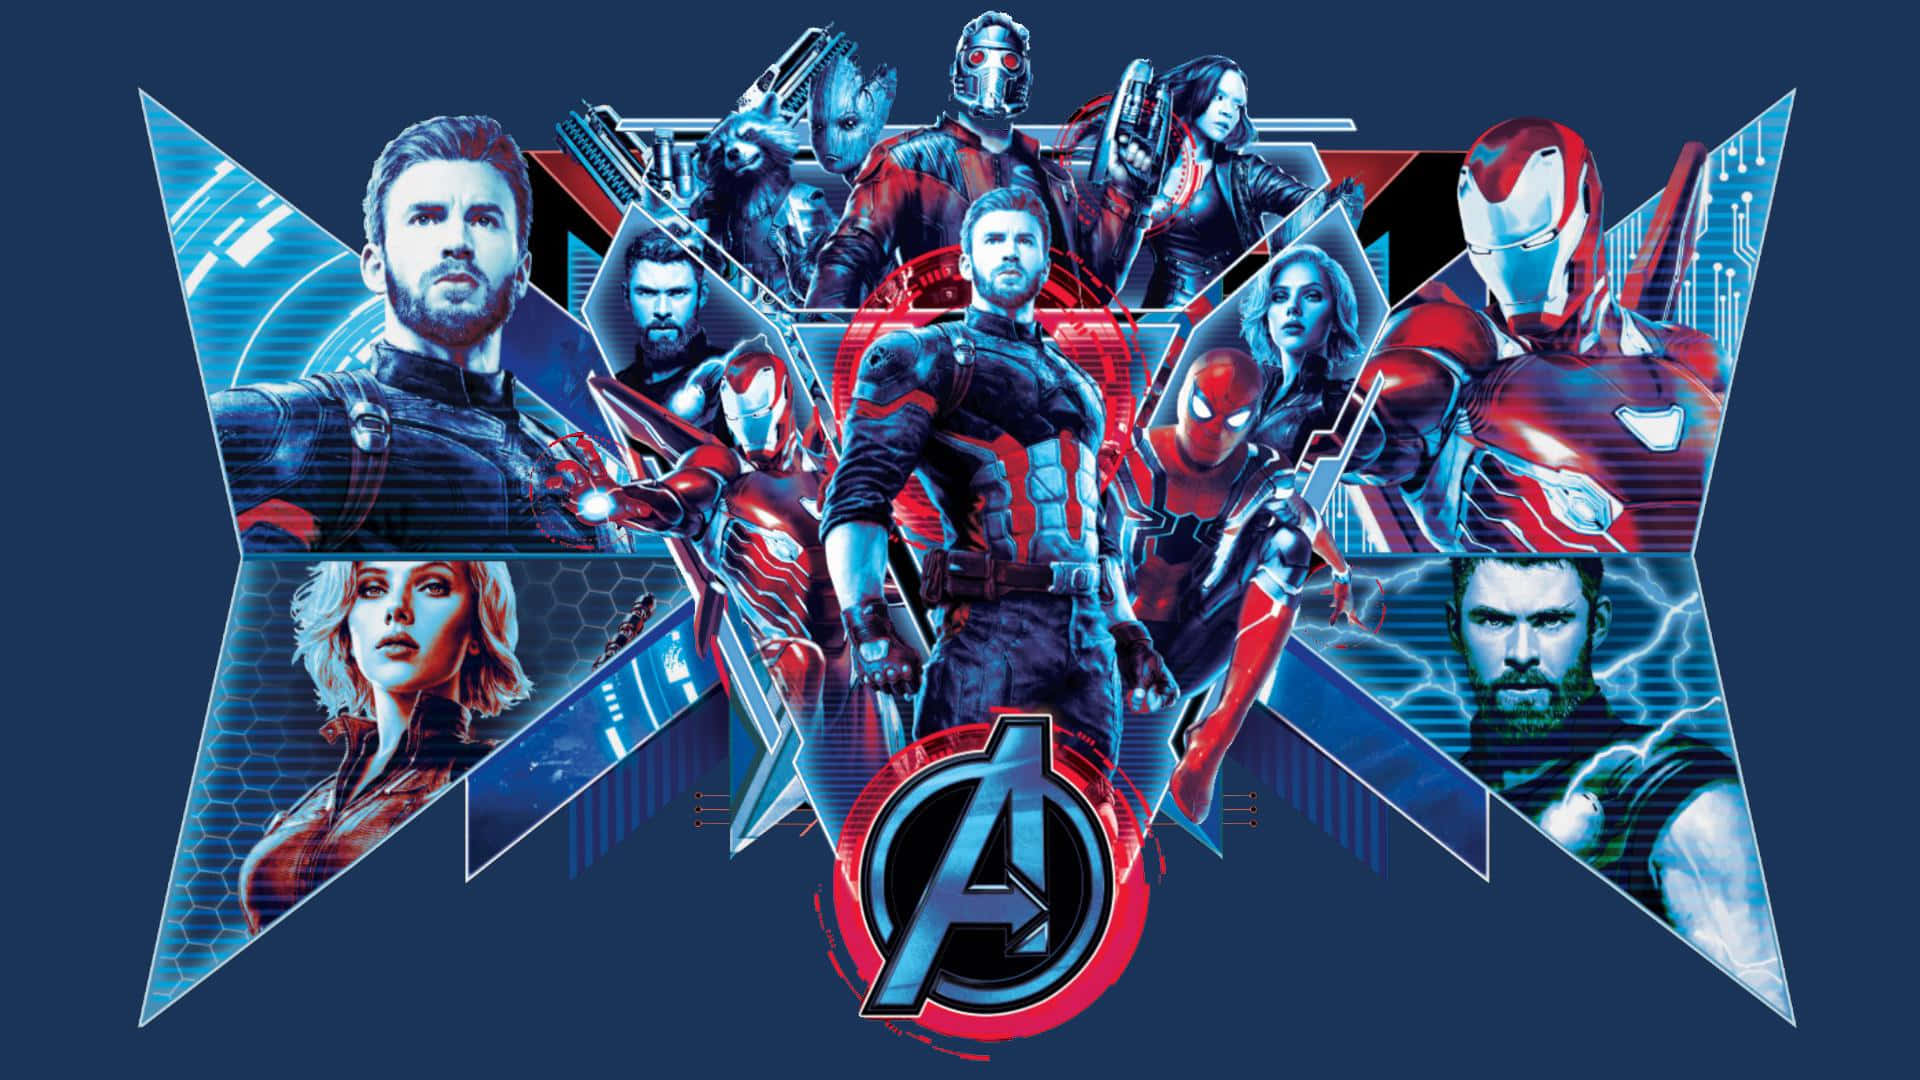 Witness the Ultron vs Iron Man battle unfold in Marvel's Avengers: Infinity War